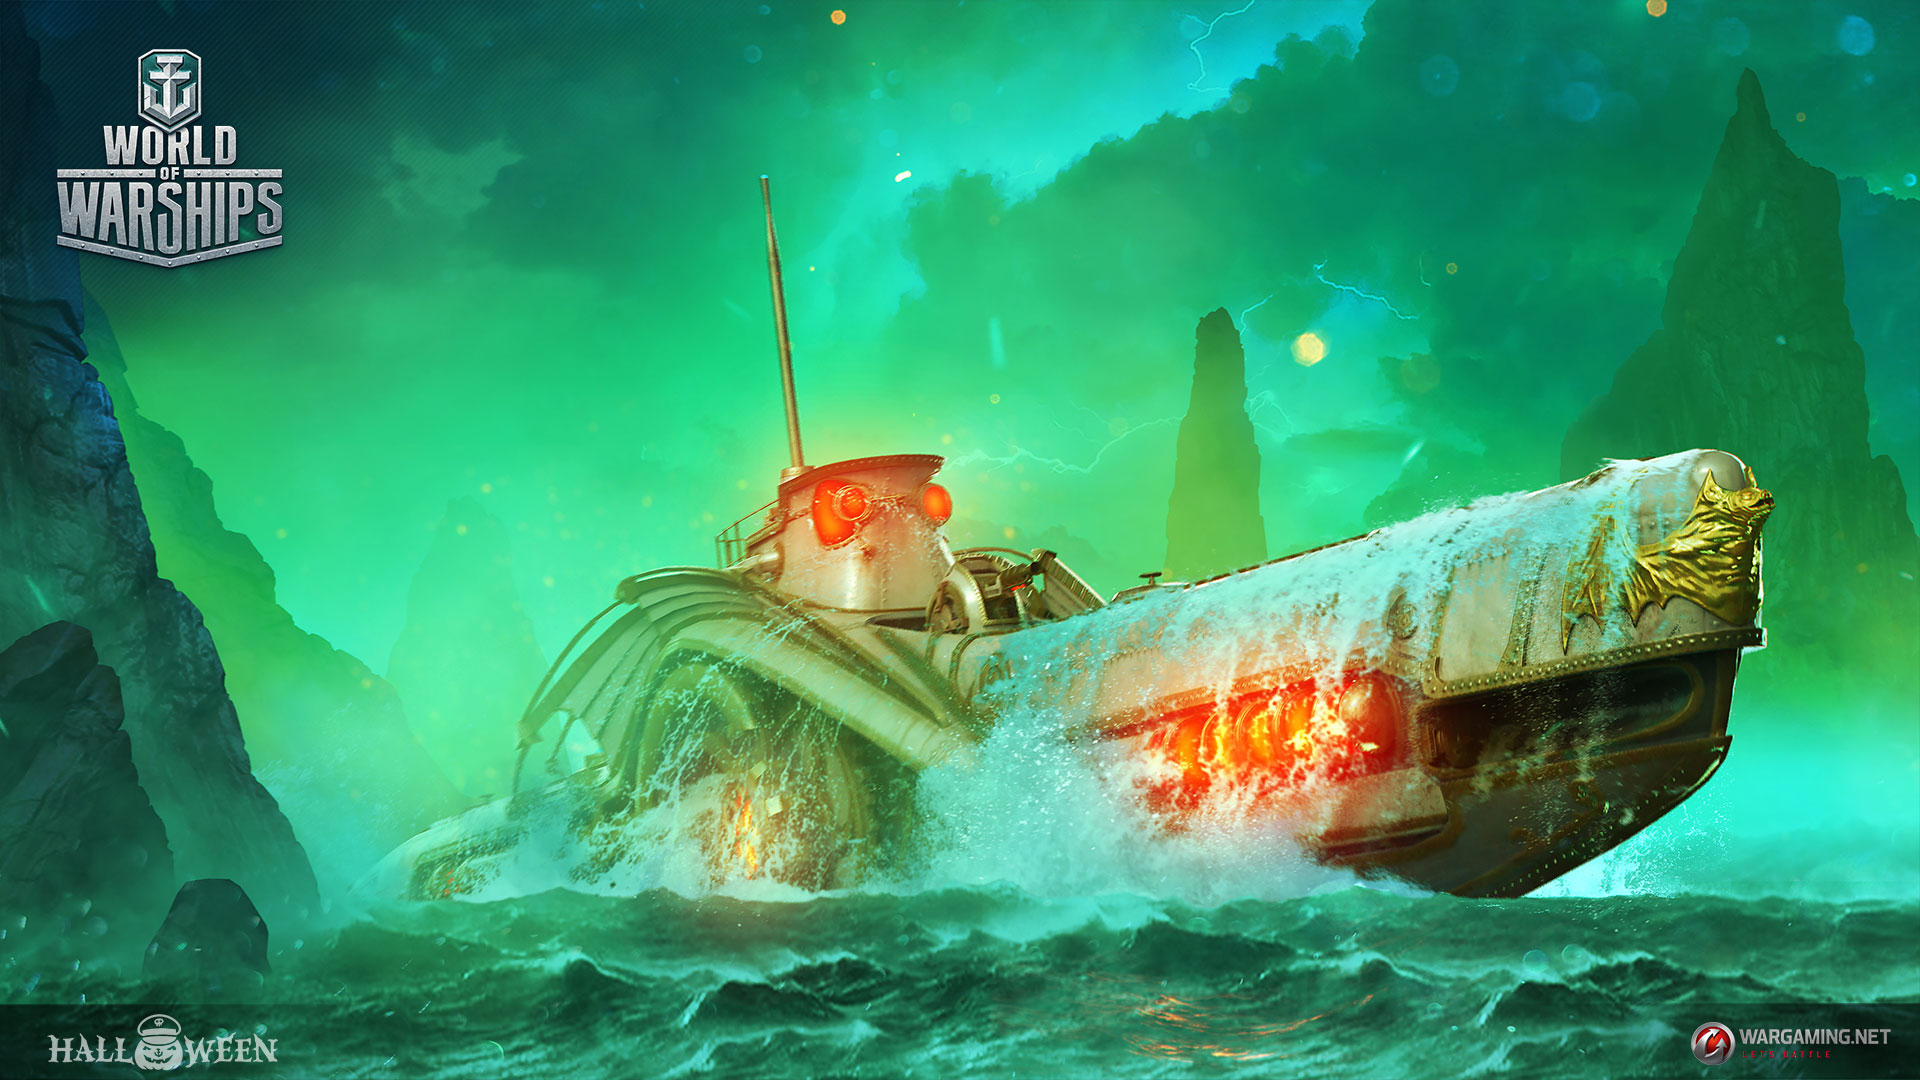 World Of Warships ハロウィーン オペレーション 海中に潜む恐怖 に潜水艦登場 ウォーゲーミングジャパン株式会社のプレスリリース